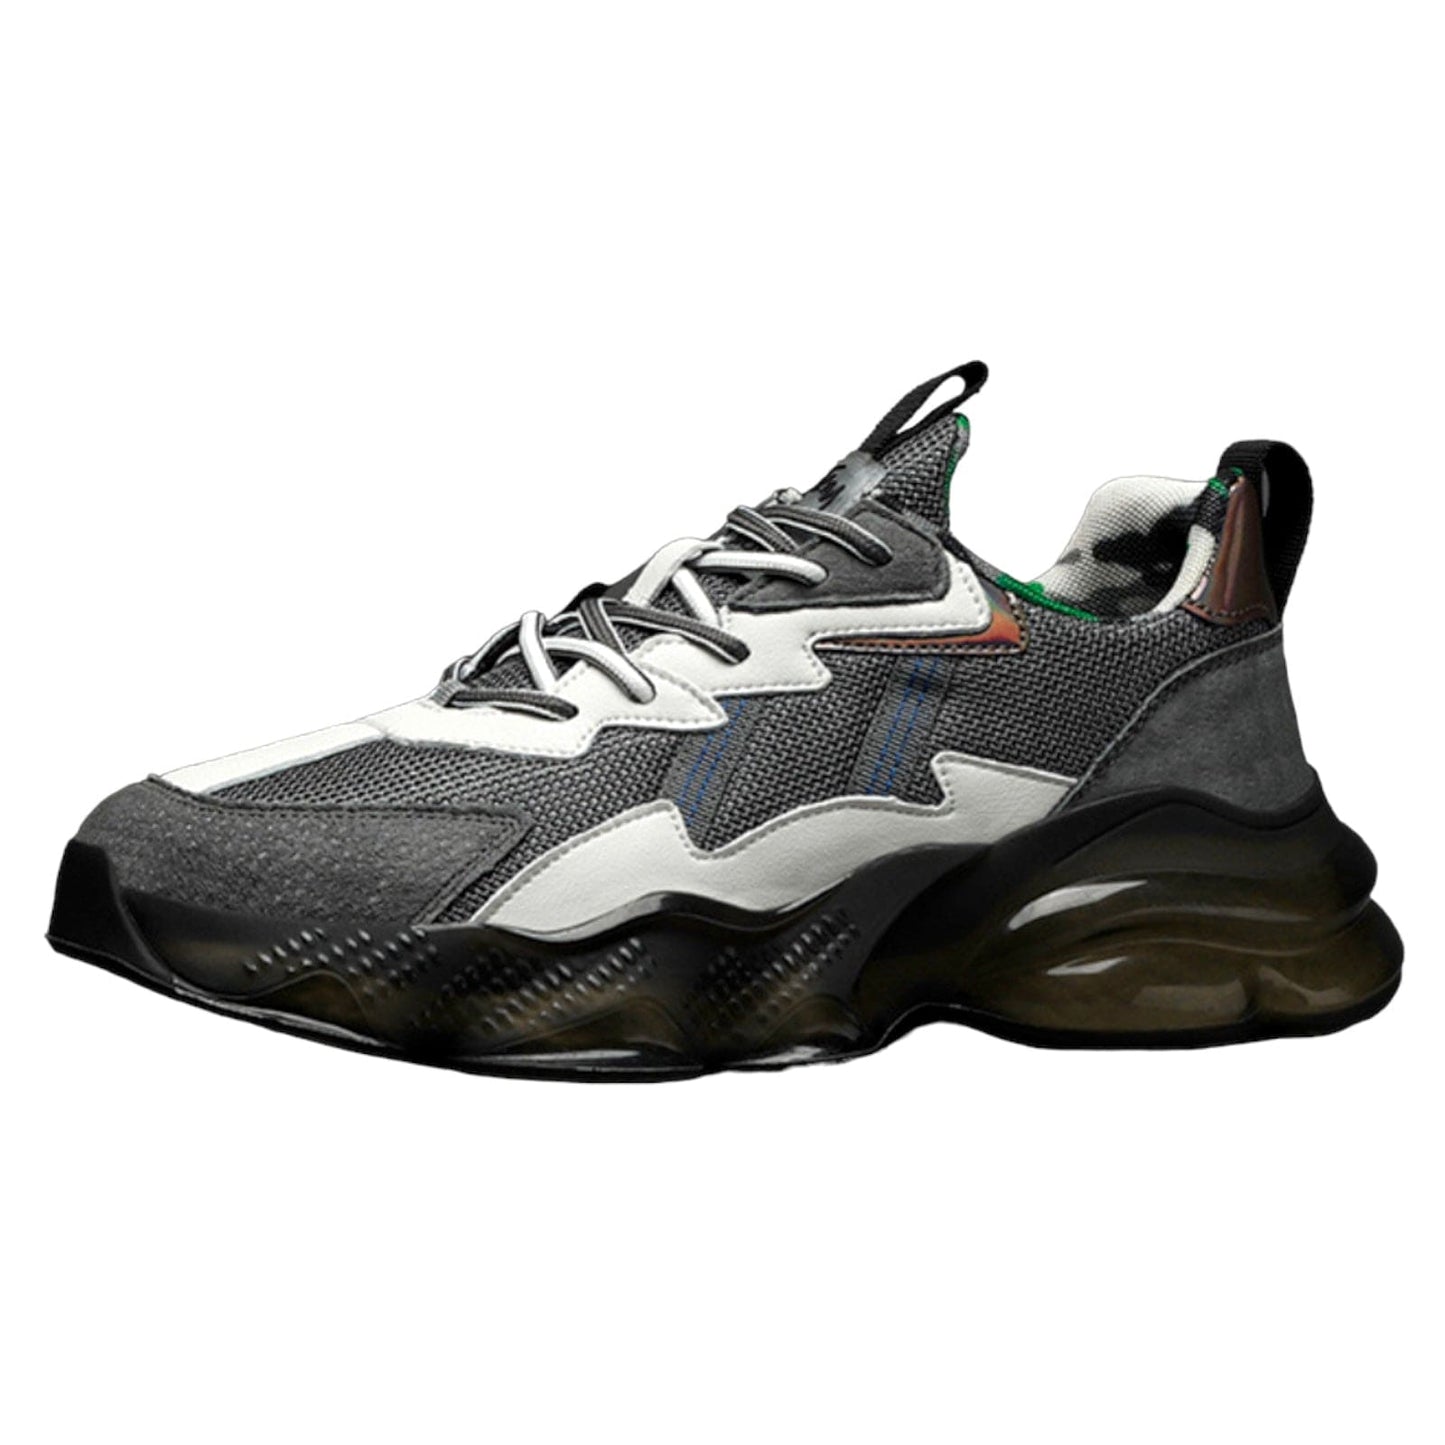 black grey sneakers pozeidon flashlander left side